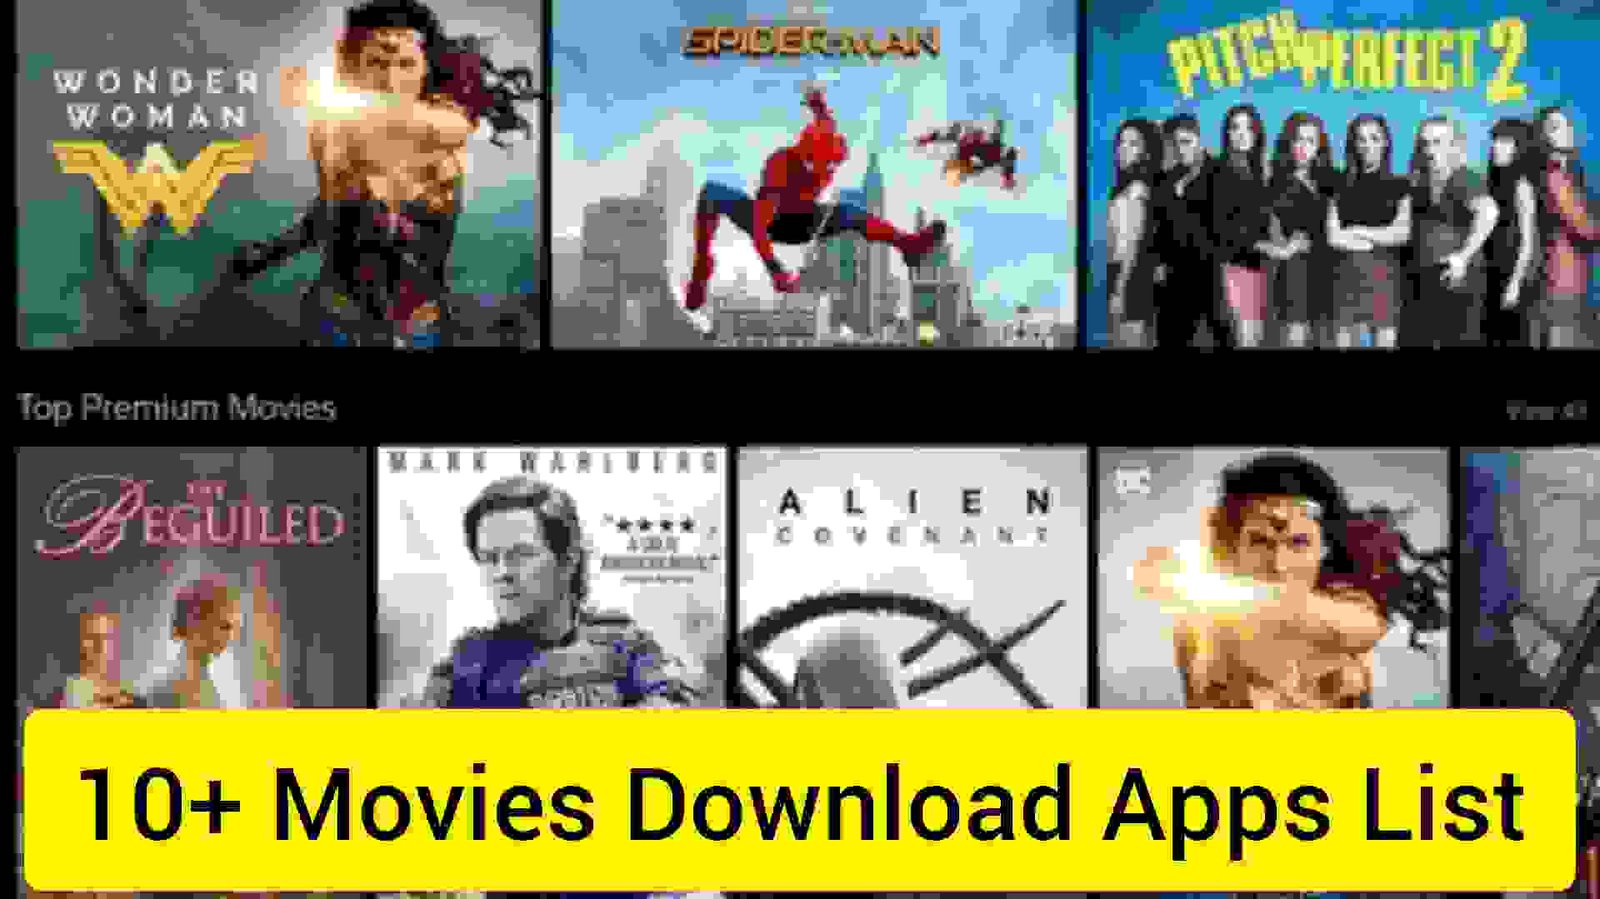 Movies Download karne Wala Apps, नई मूवी डाउनलोड करने वाला ऐप्स, Film Download karne Wala Apps